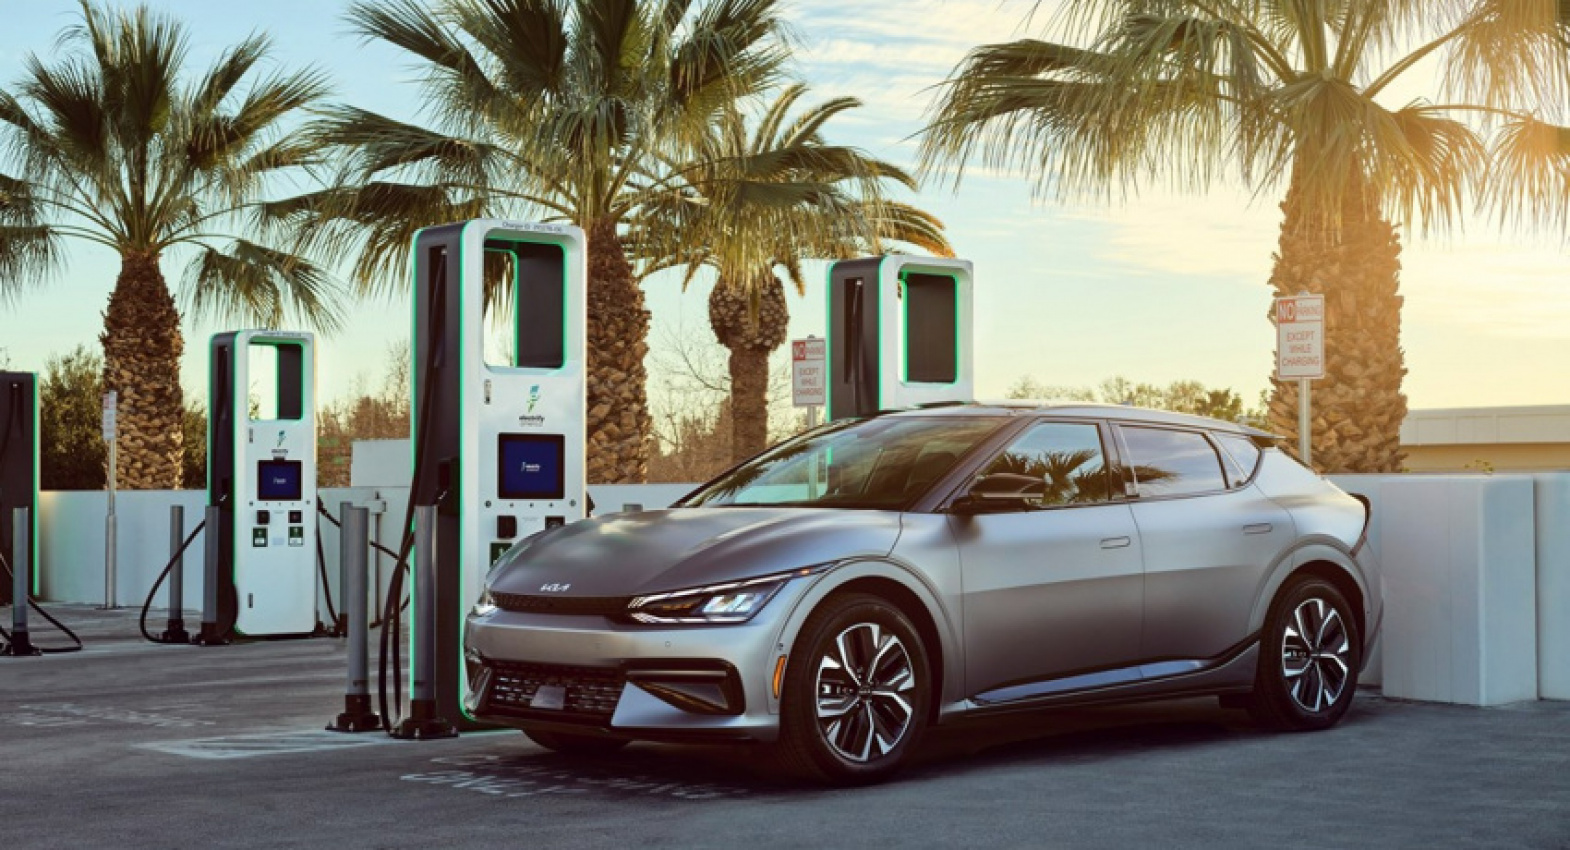 autos, cars, kia, news, electric vehicles, kia ev6, new cars, kia offers ev6 buyers up to around 4,000 miles of free charging on electrify america network